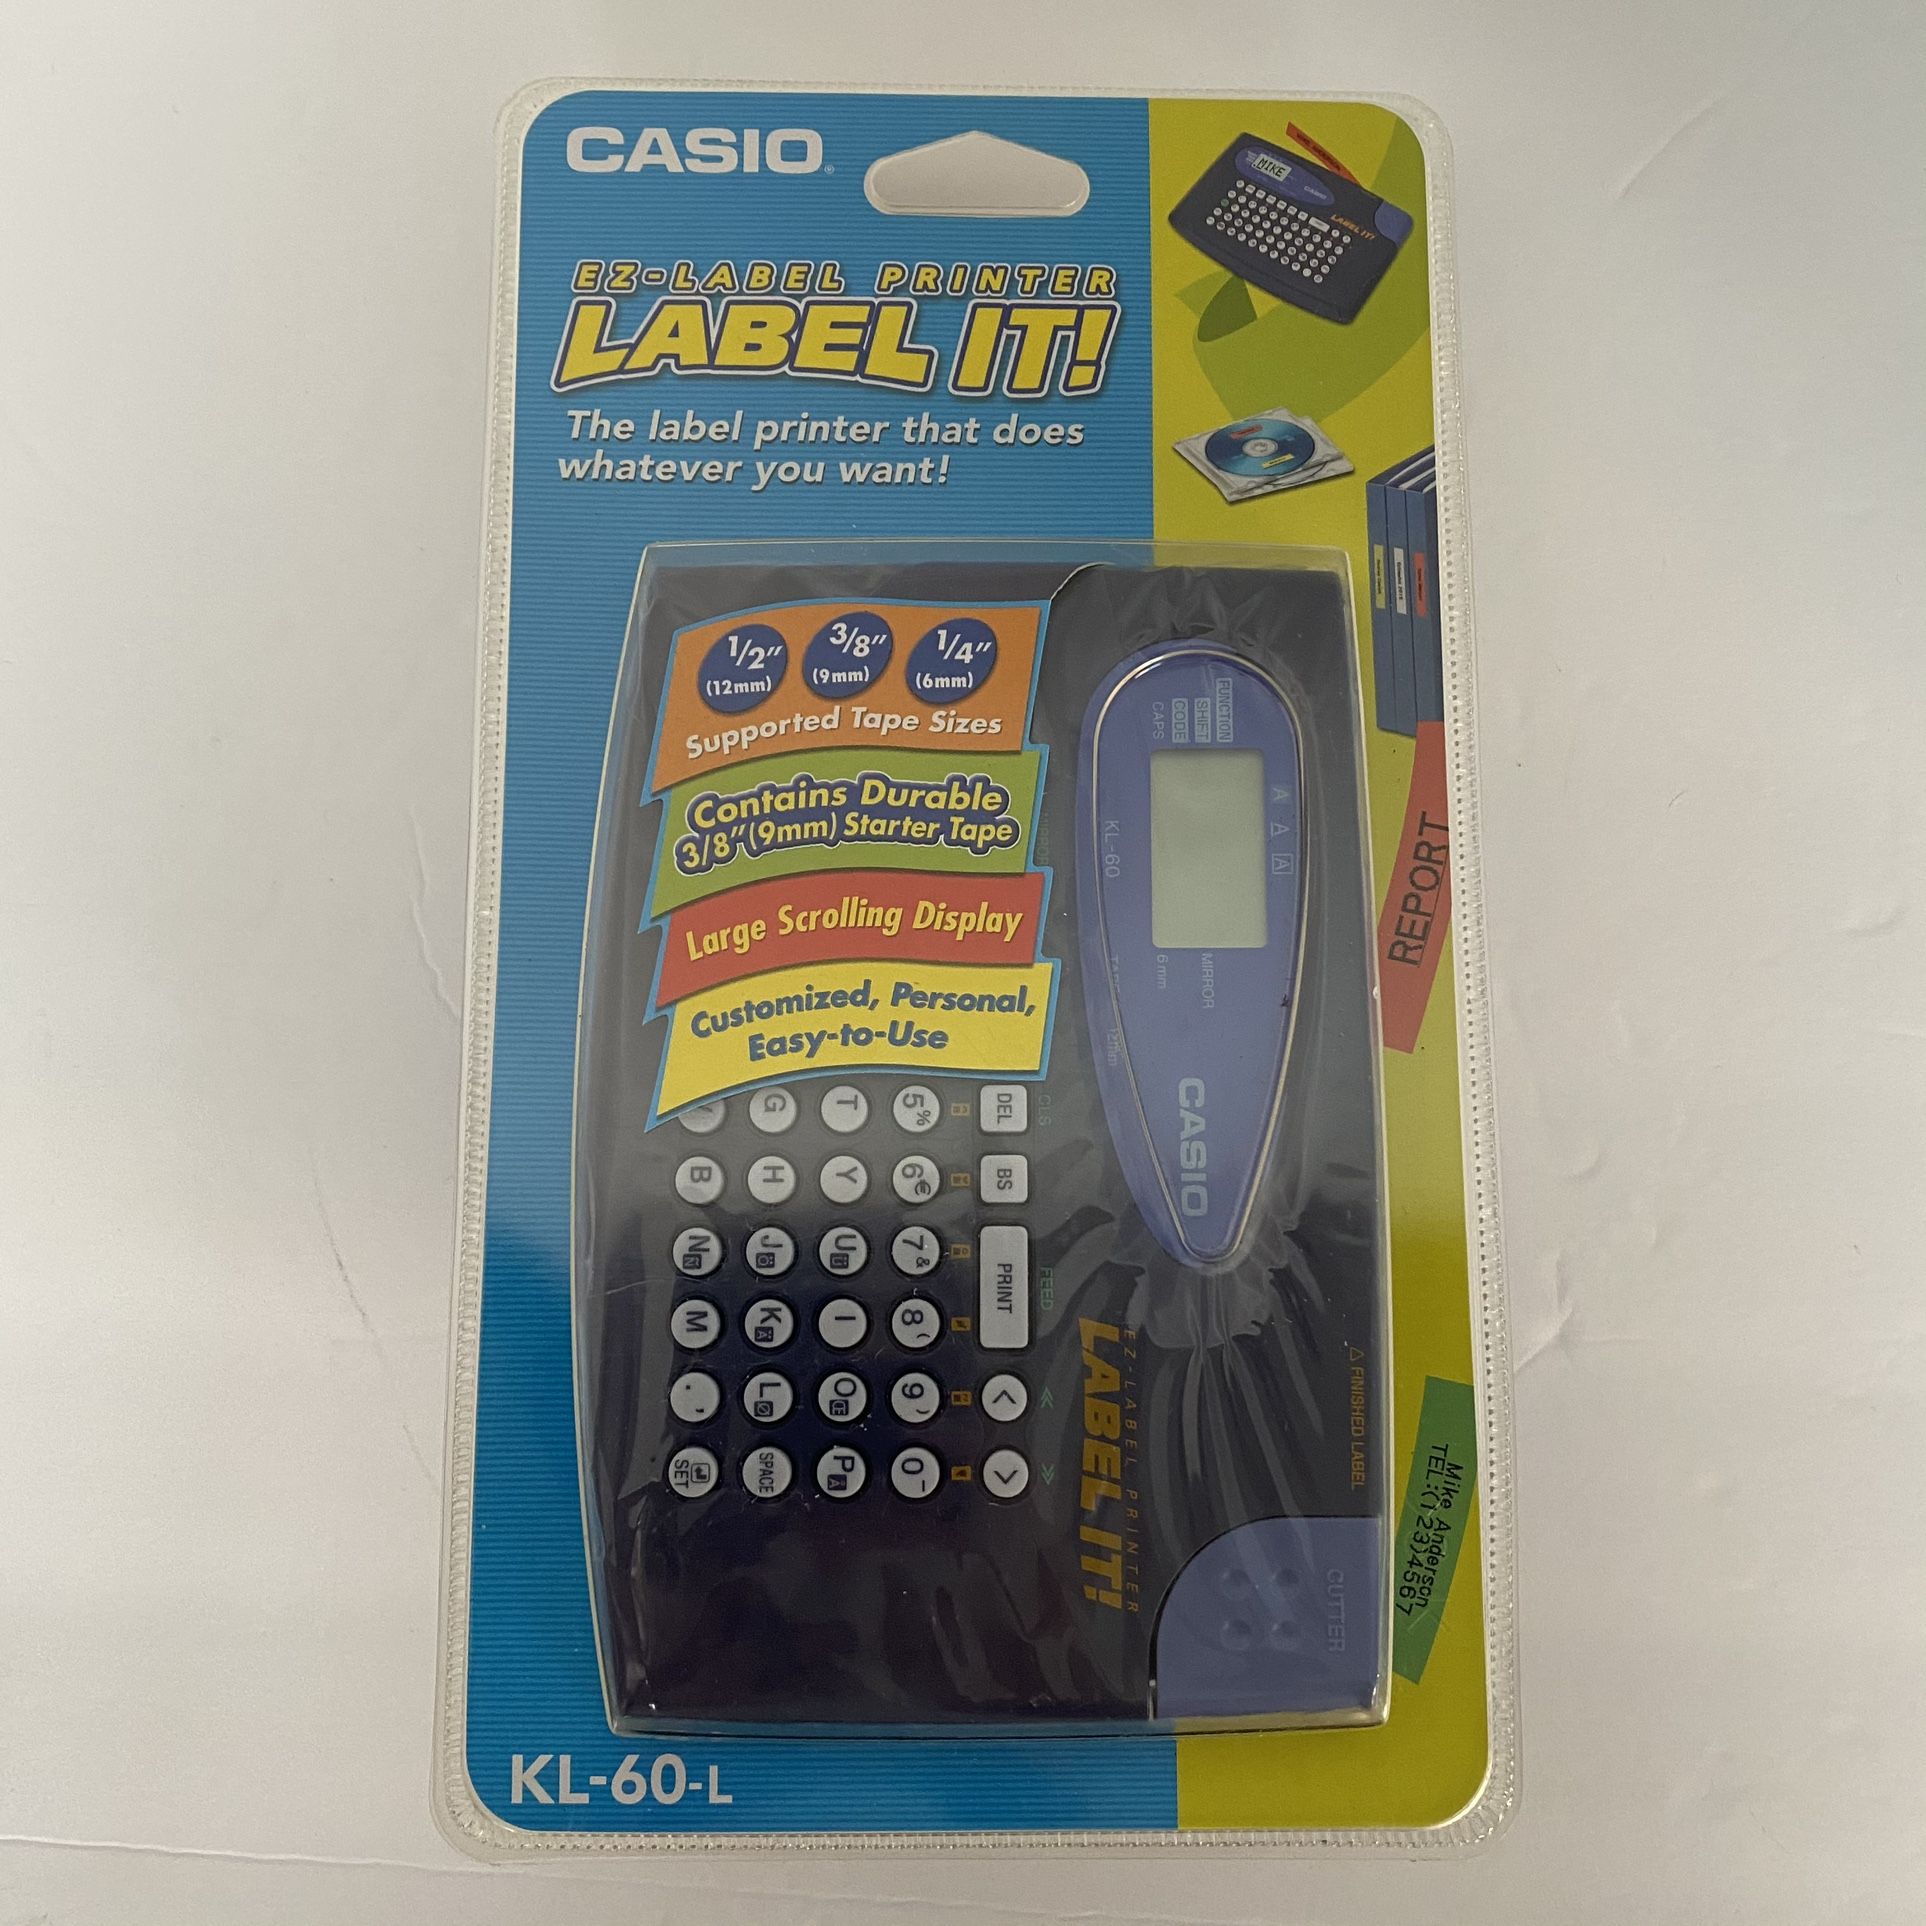 Casio Label Maker Printer KL-60L, Brand New